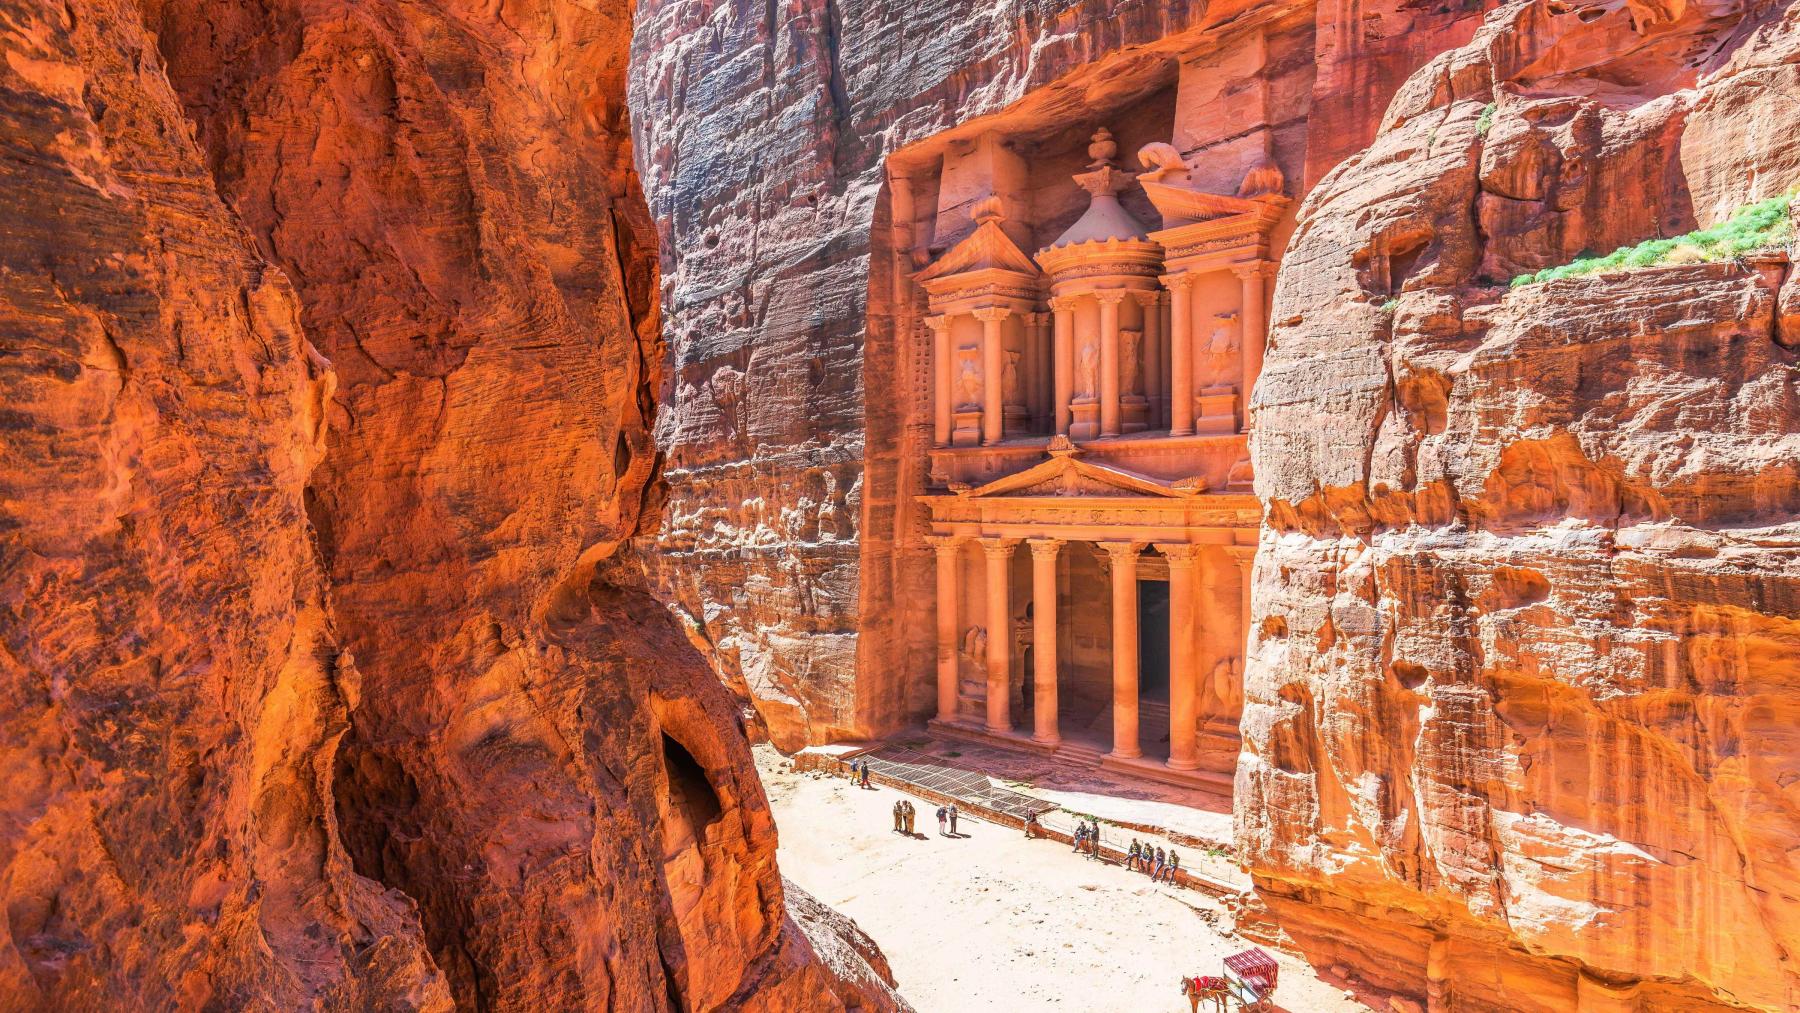 Jordan: The Treasure of Arab